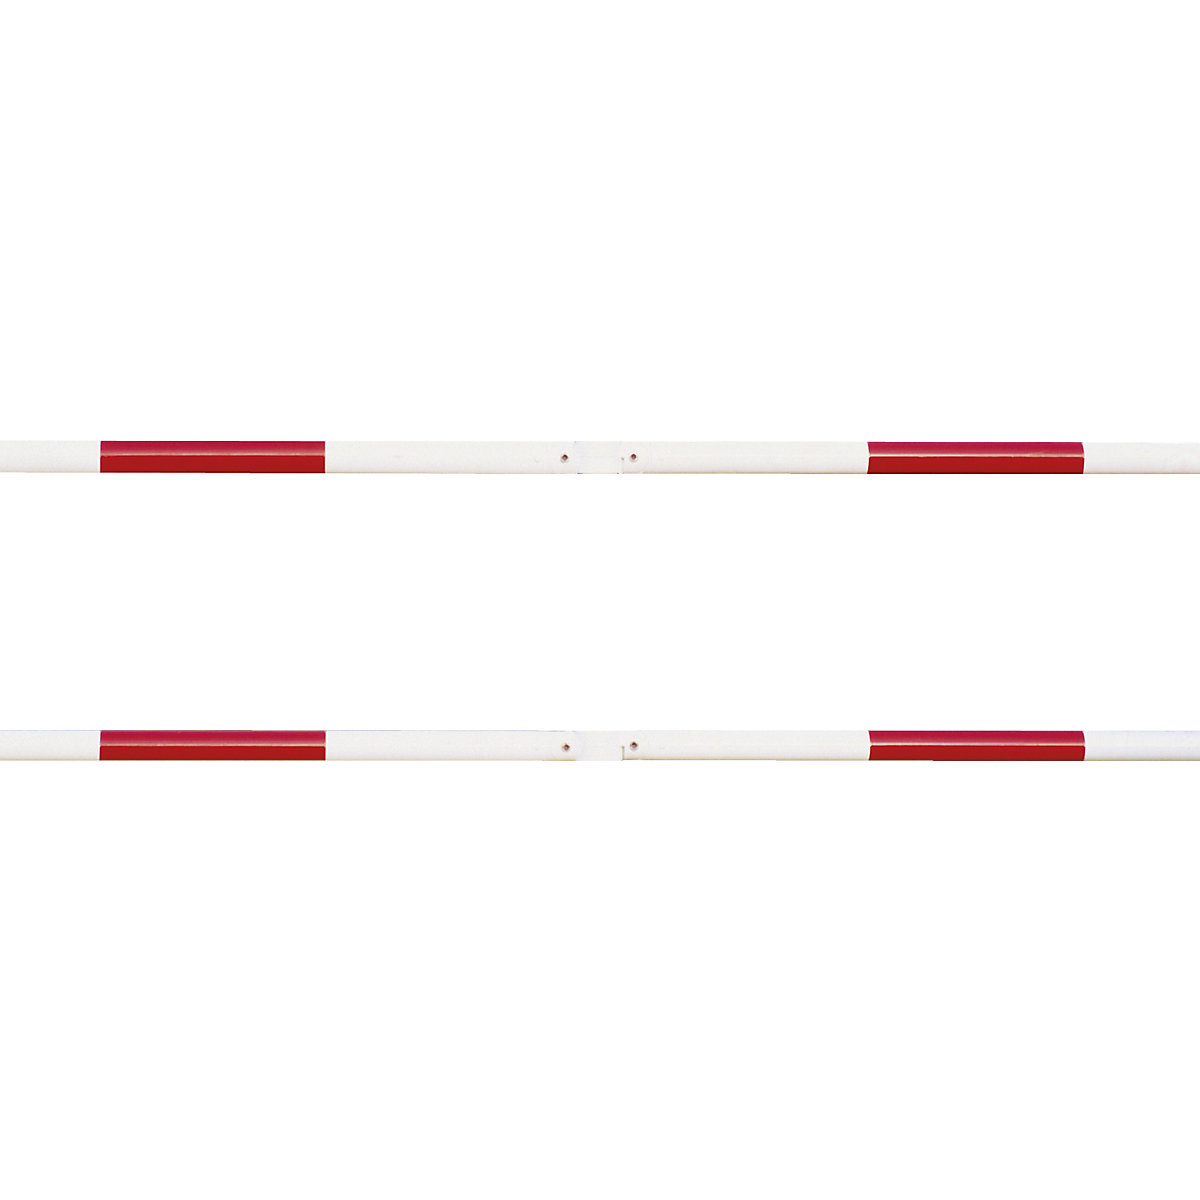 Systém zábradlí, priečna rúrka Ø 60 mm, červená/biela, dĺžka 1000 mm-8